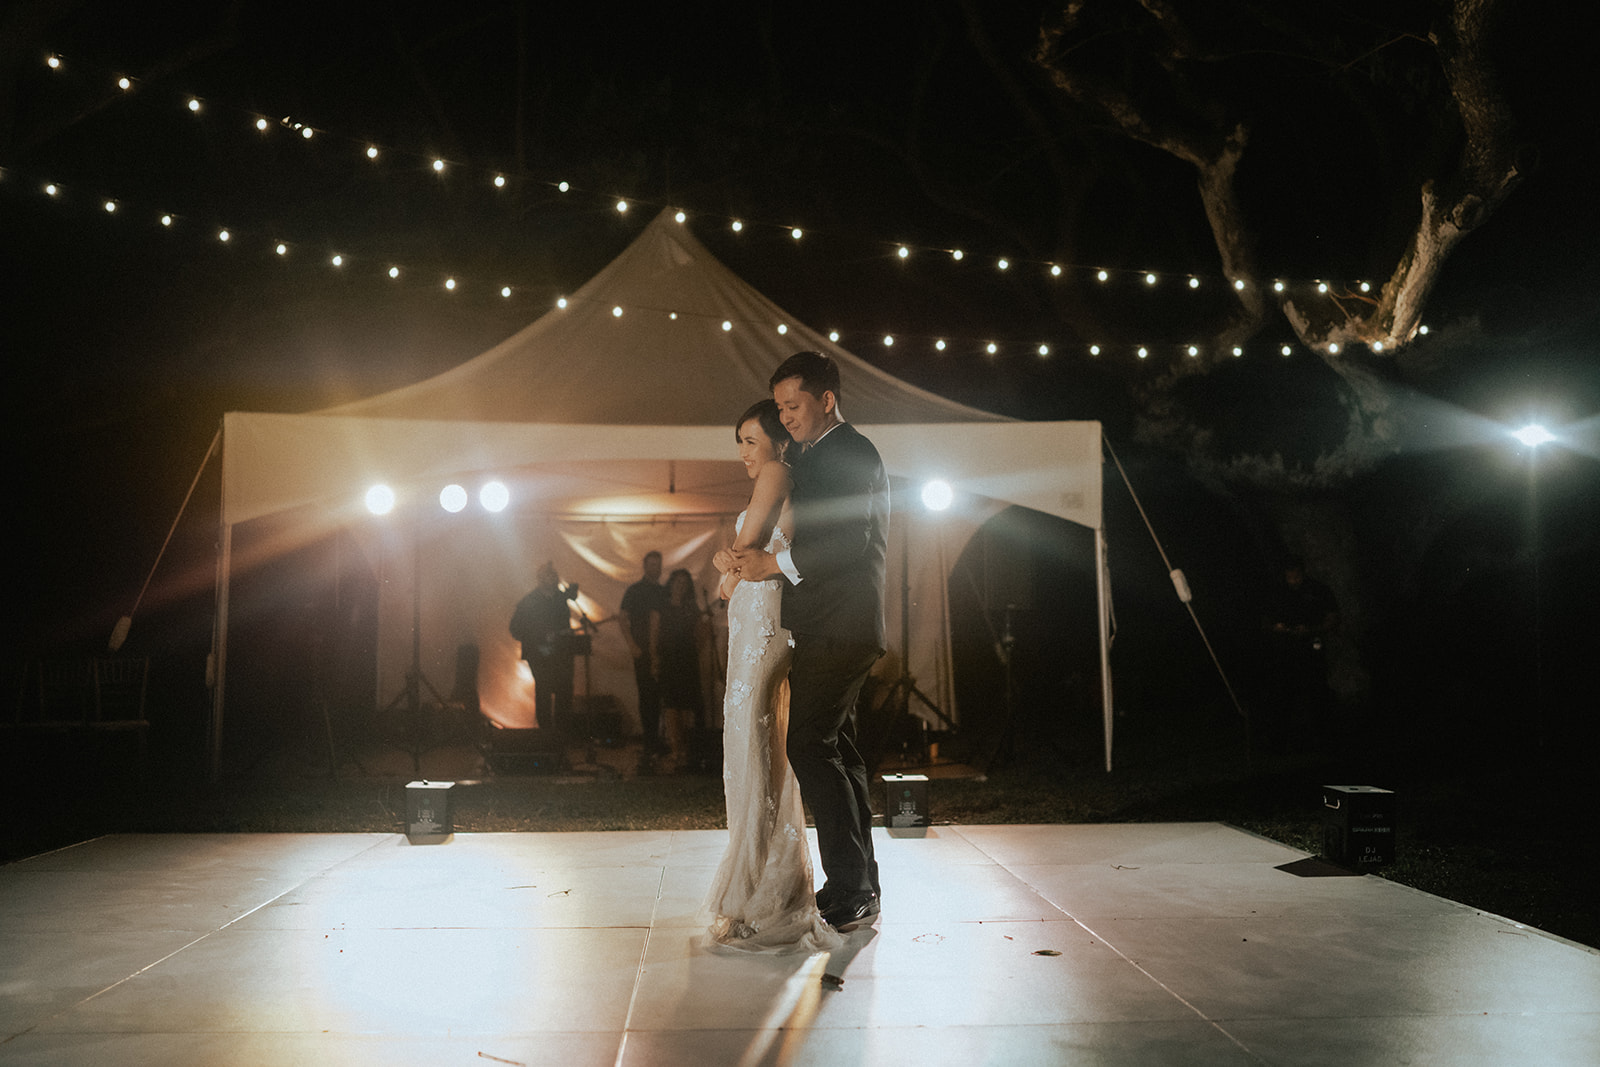 First Dance in a outdoor wedding reception at Kualoa Ranch Hawaii